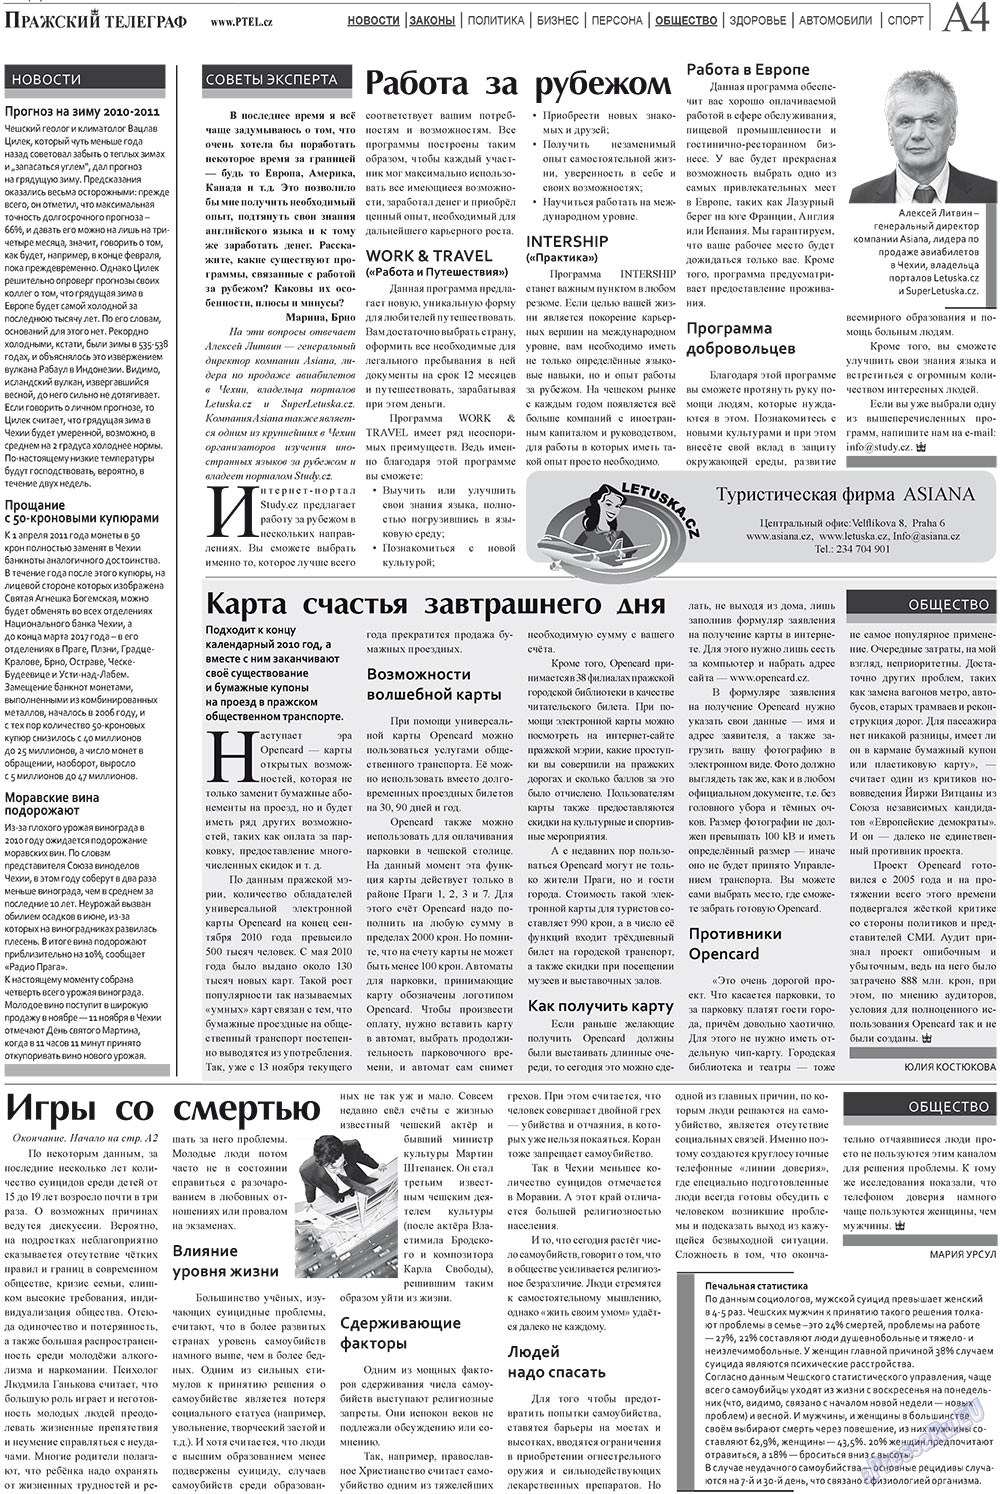 Пражский телеграф, газета. 2010 №41 стр.4